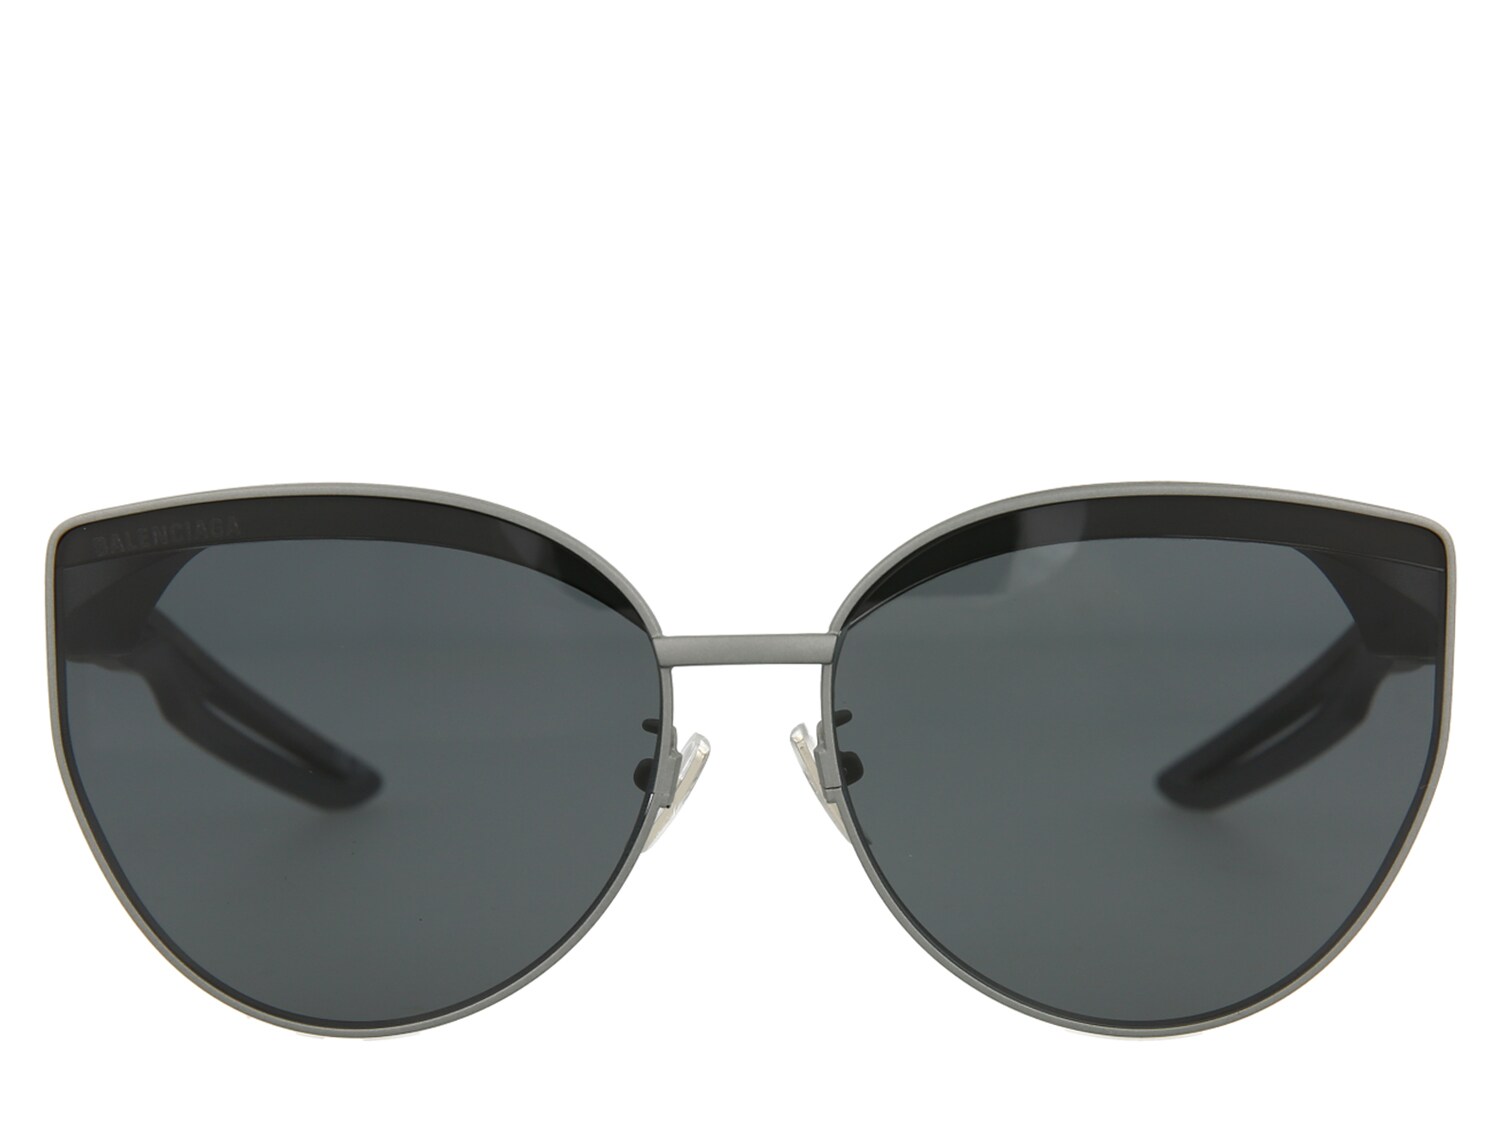 Balenciaga Fashion Sunglasses - FINAL SALE - Free Shipping | DSW